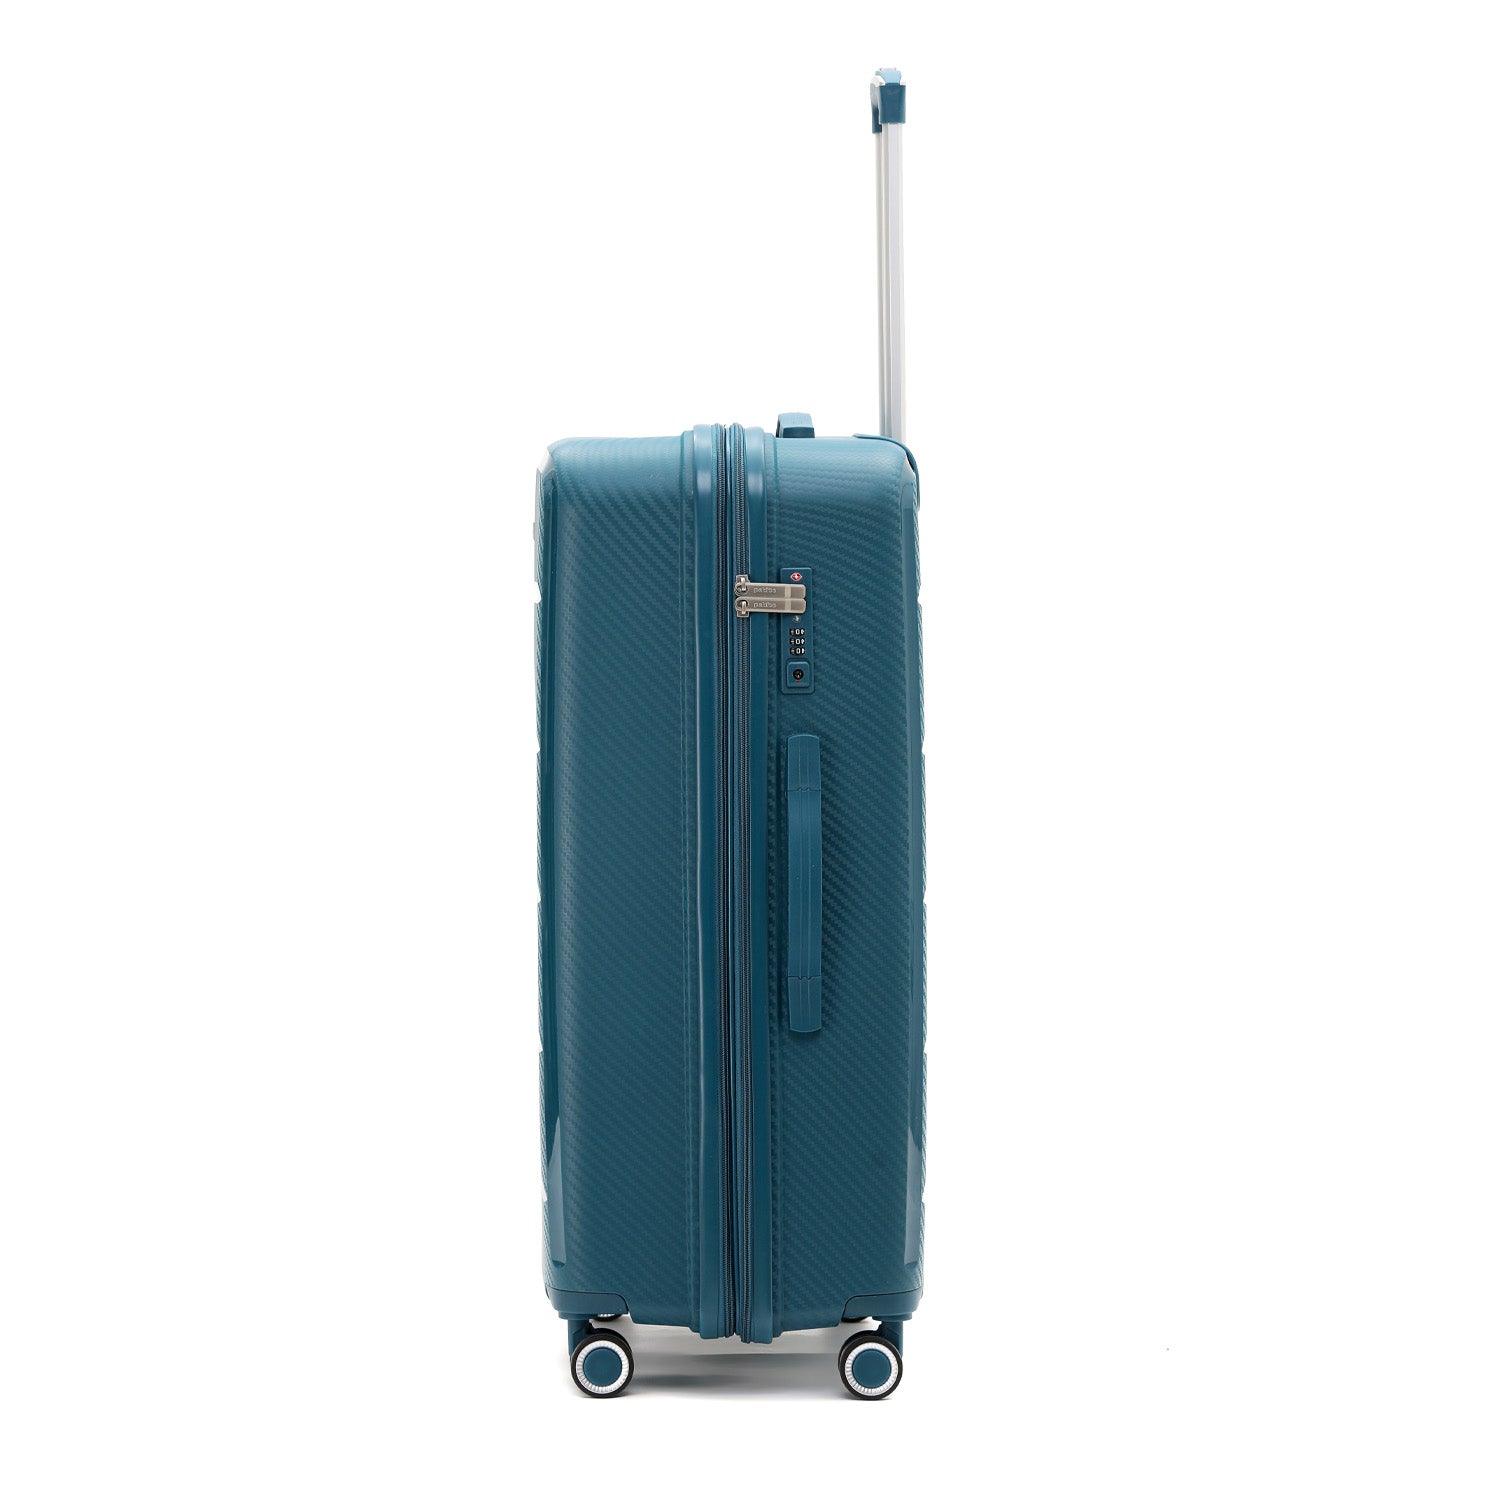 Paklite - PA7350 Set of 3 Suitcases - Blue-6